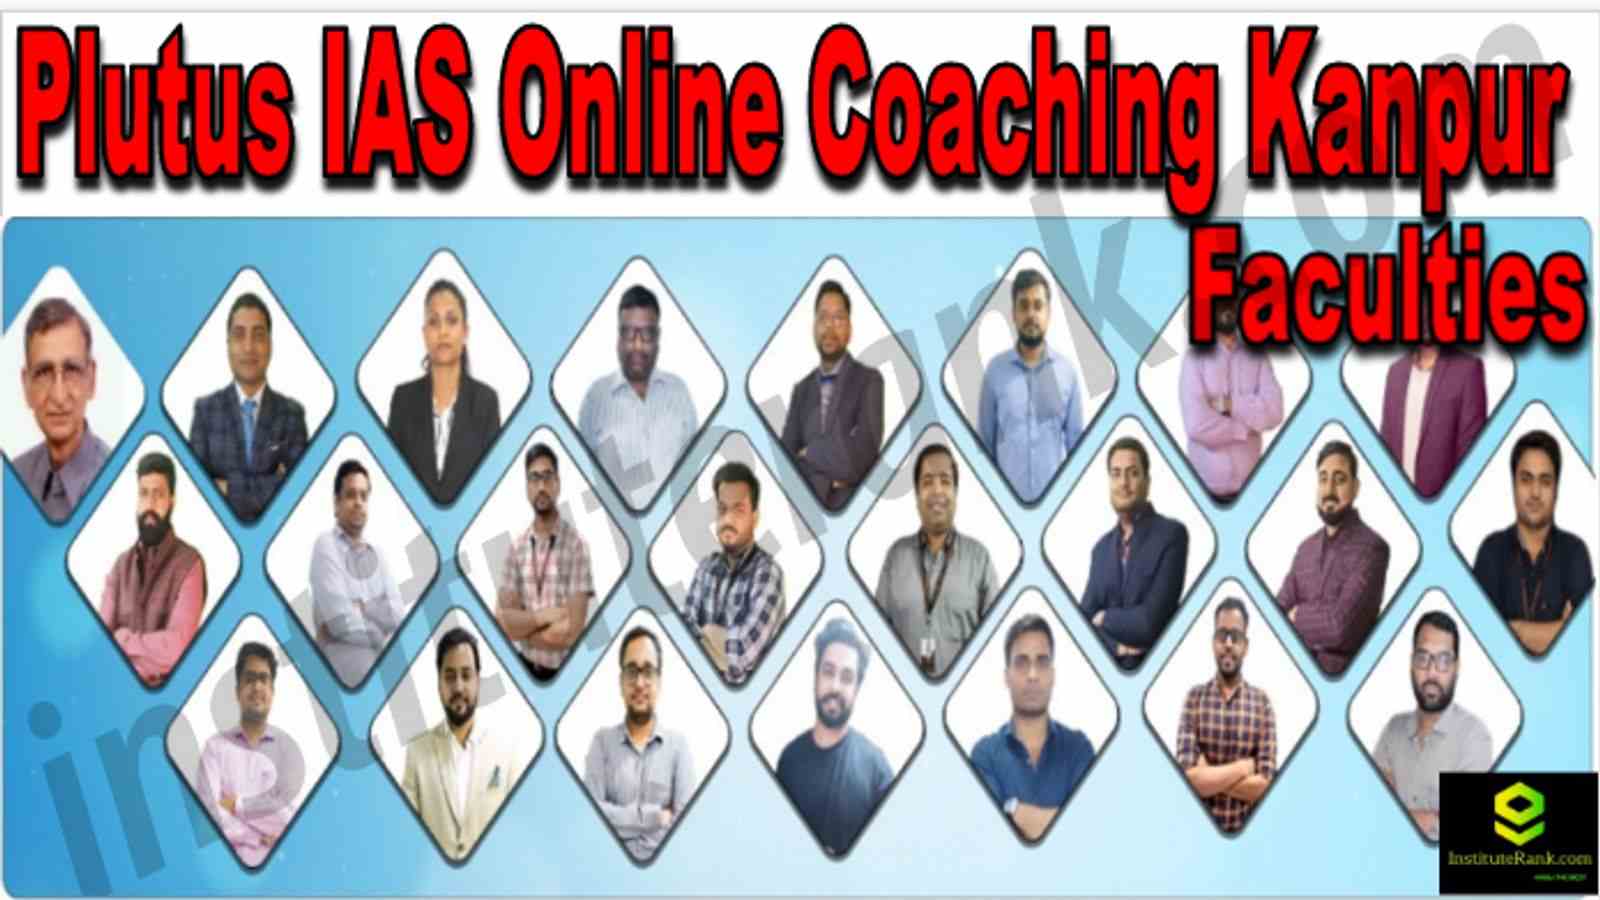 Plutus IAS Online Coaching Kanpur Reviews Faculties